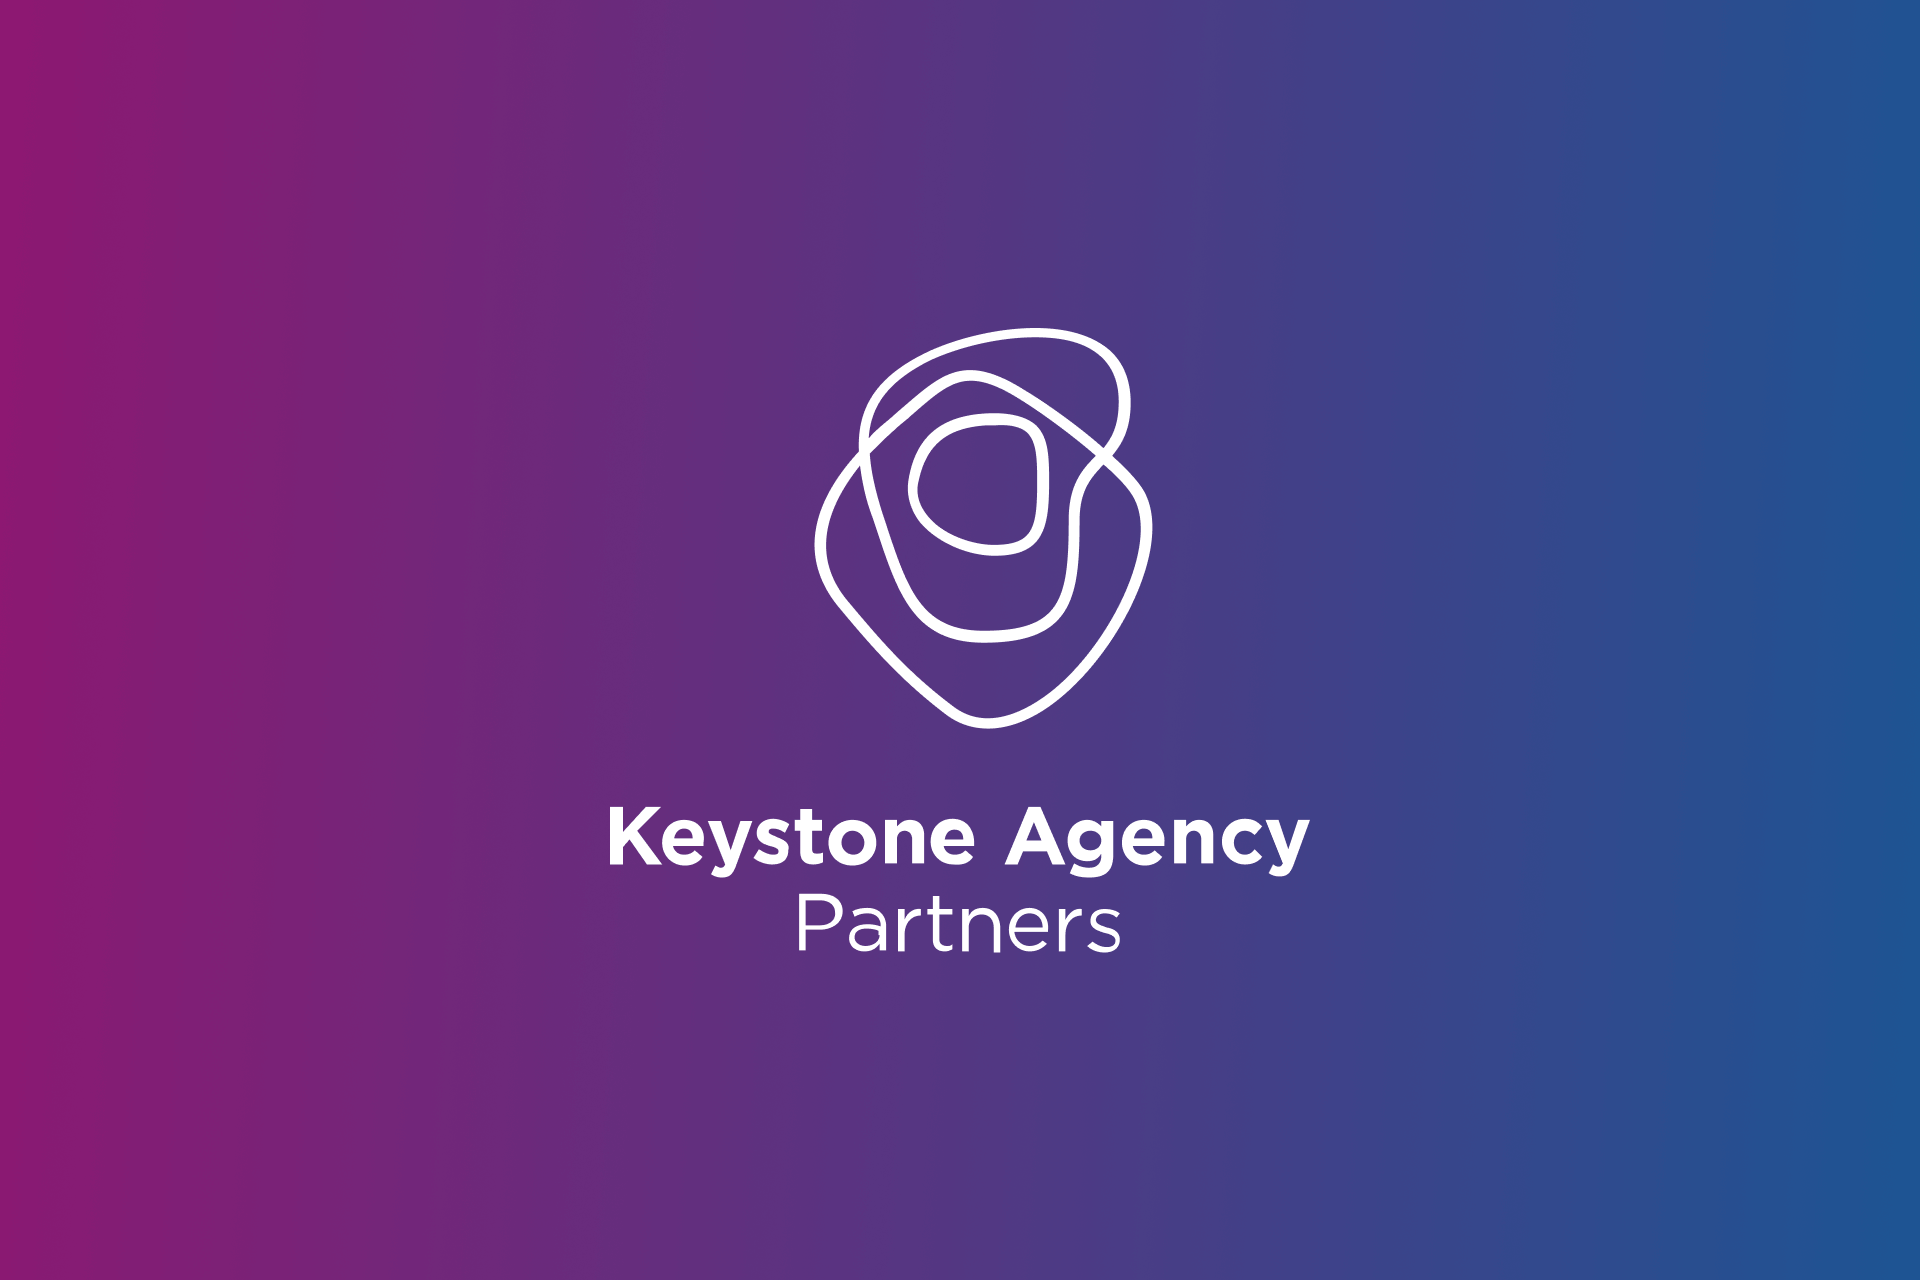 Keystone Agency Partners Form Partnership with Strategic Insurance Partners